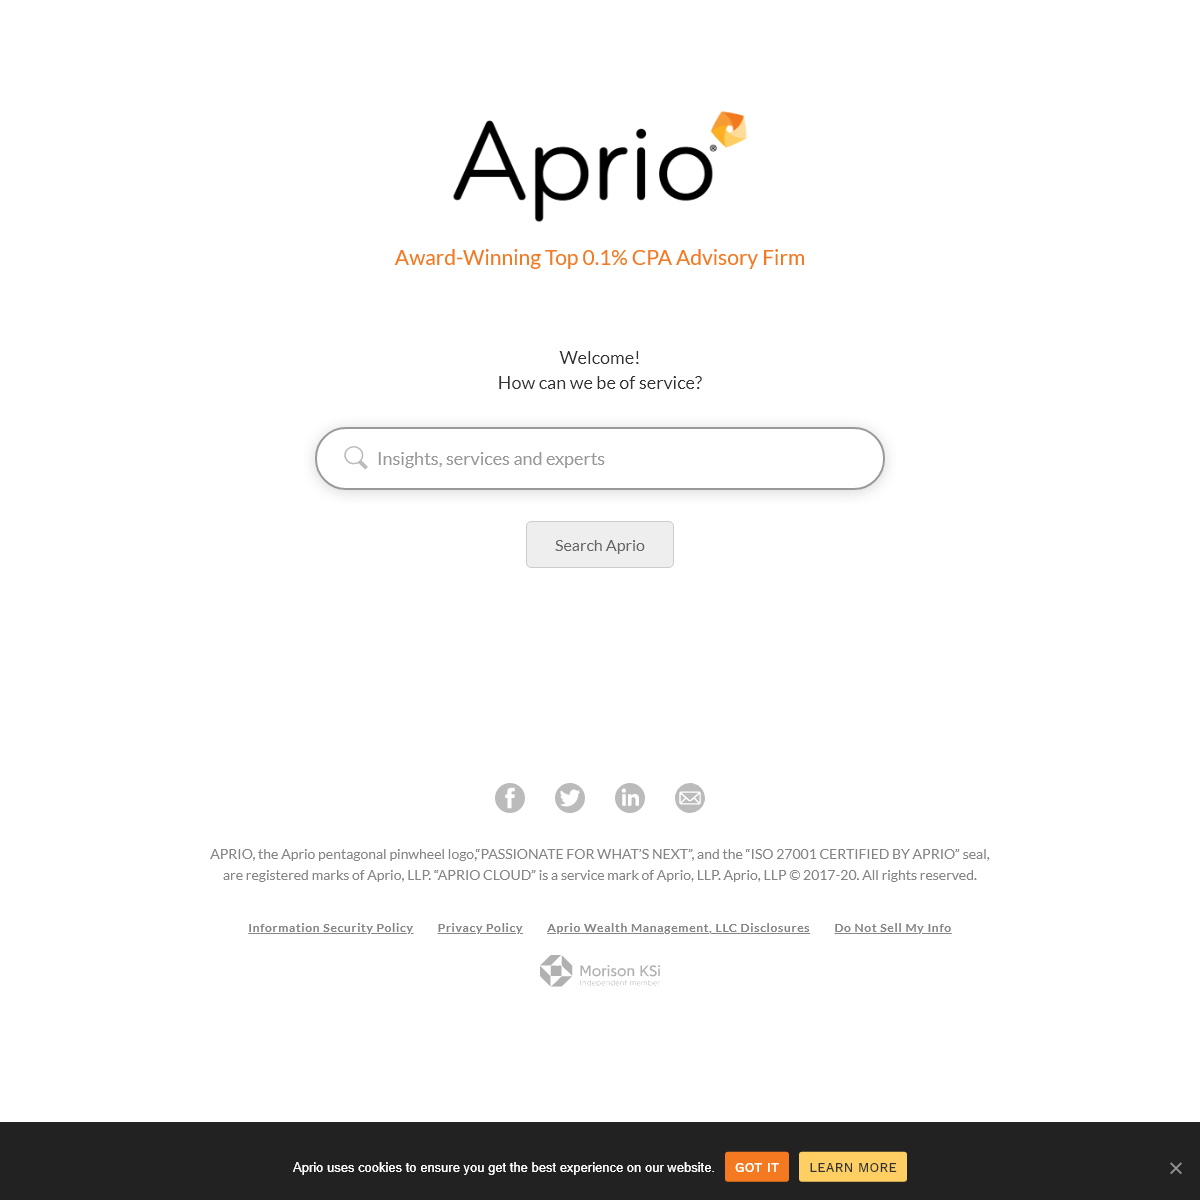 A complete backup of aprio.com